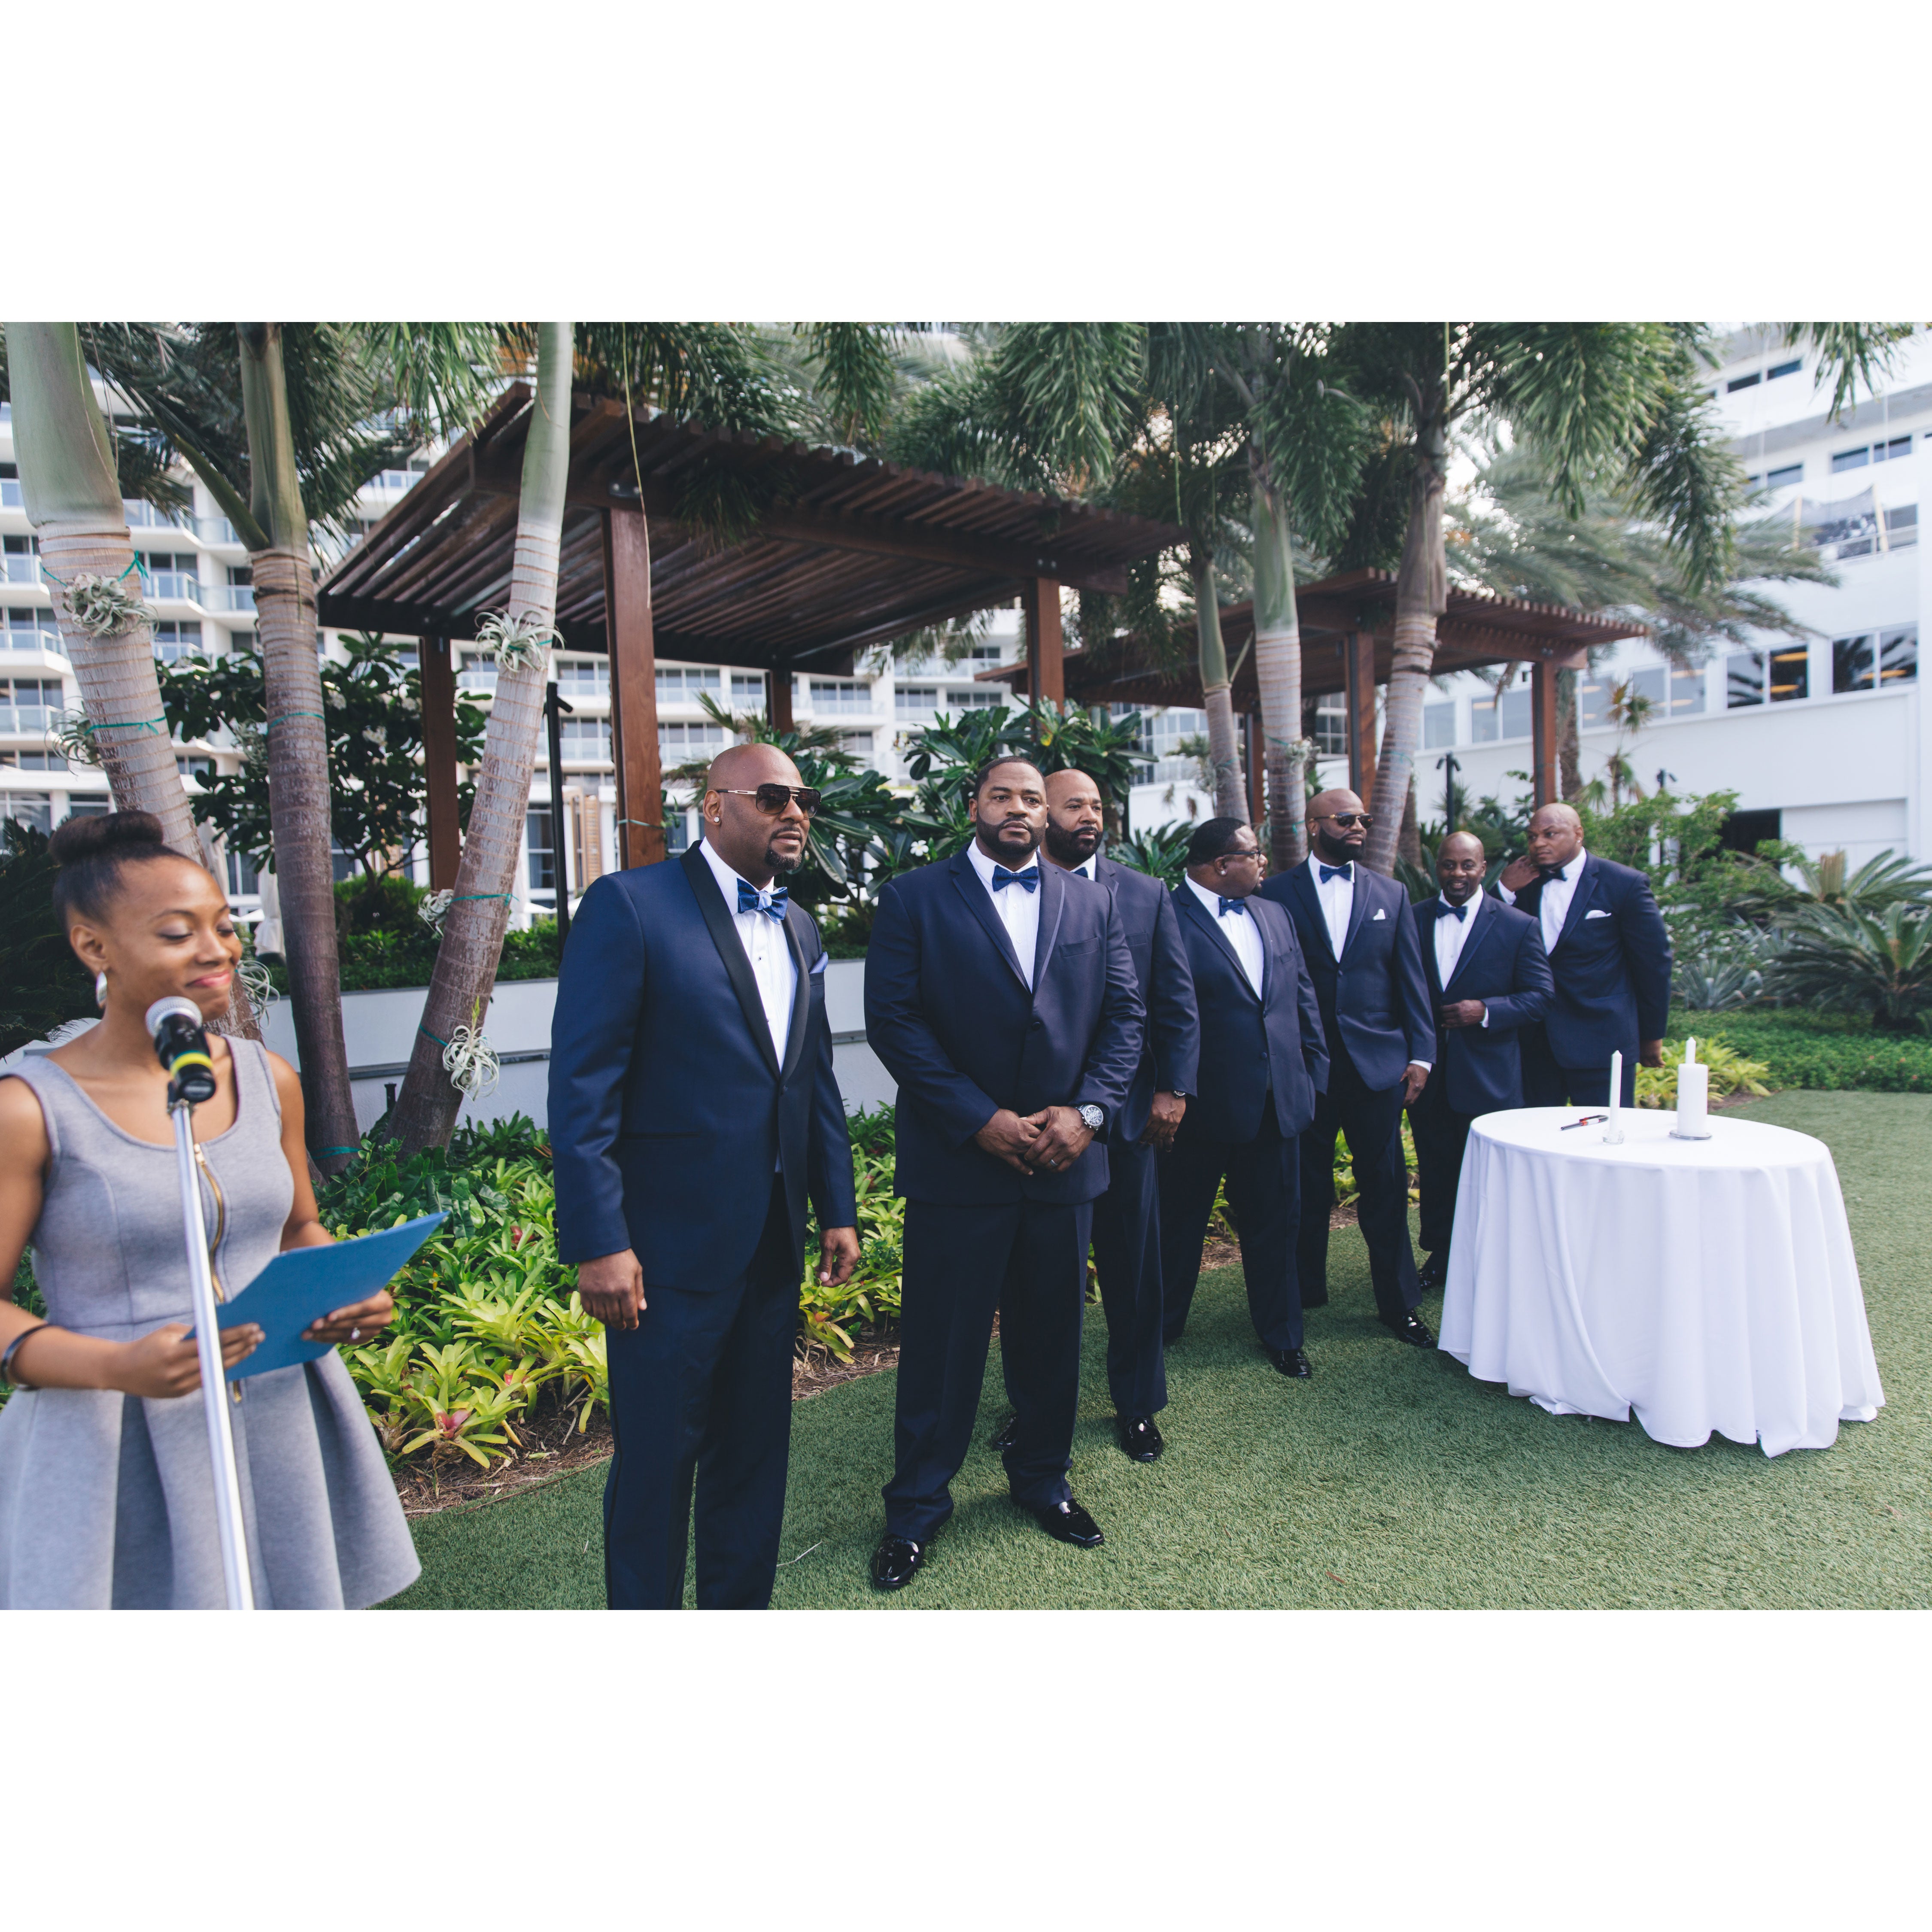 Bridal Bliss: April and Erick's  Miami Wedding
